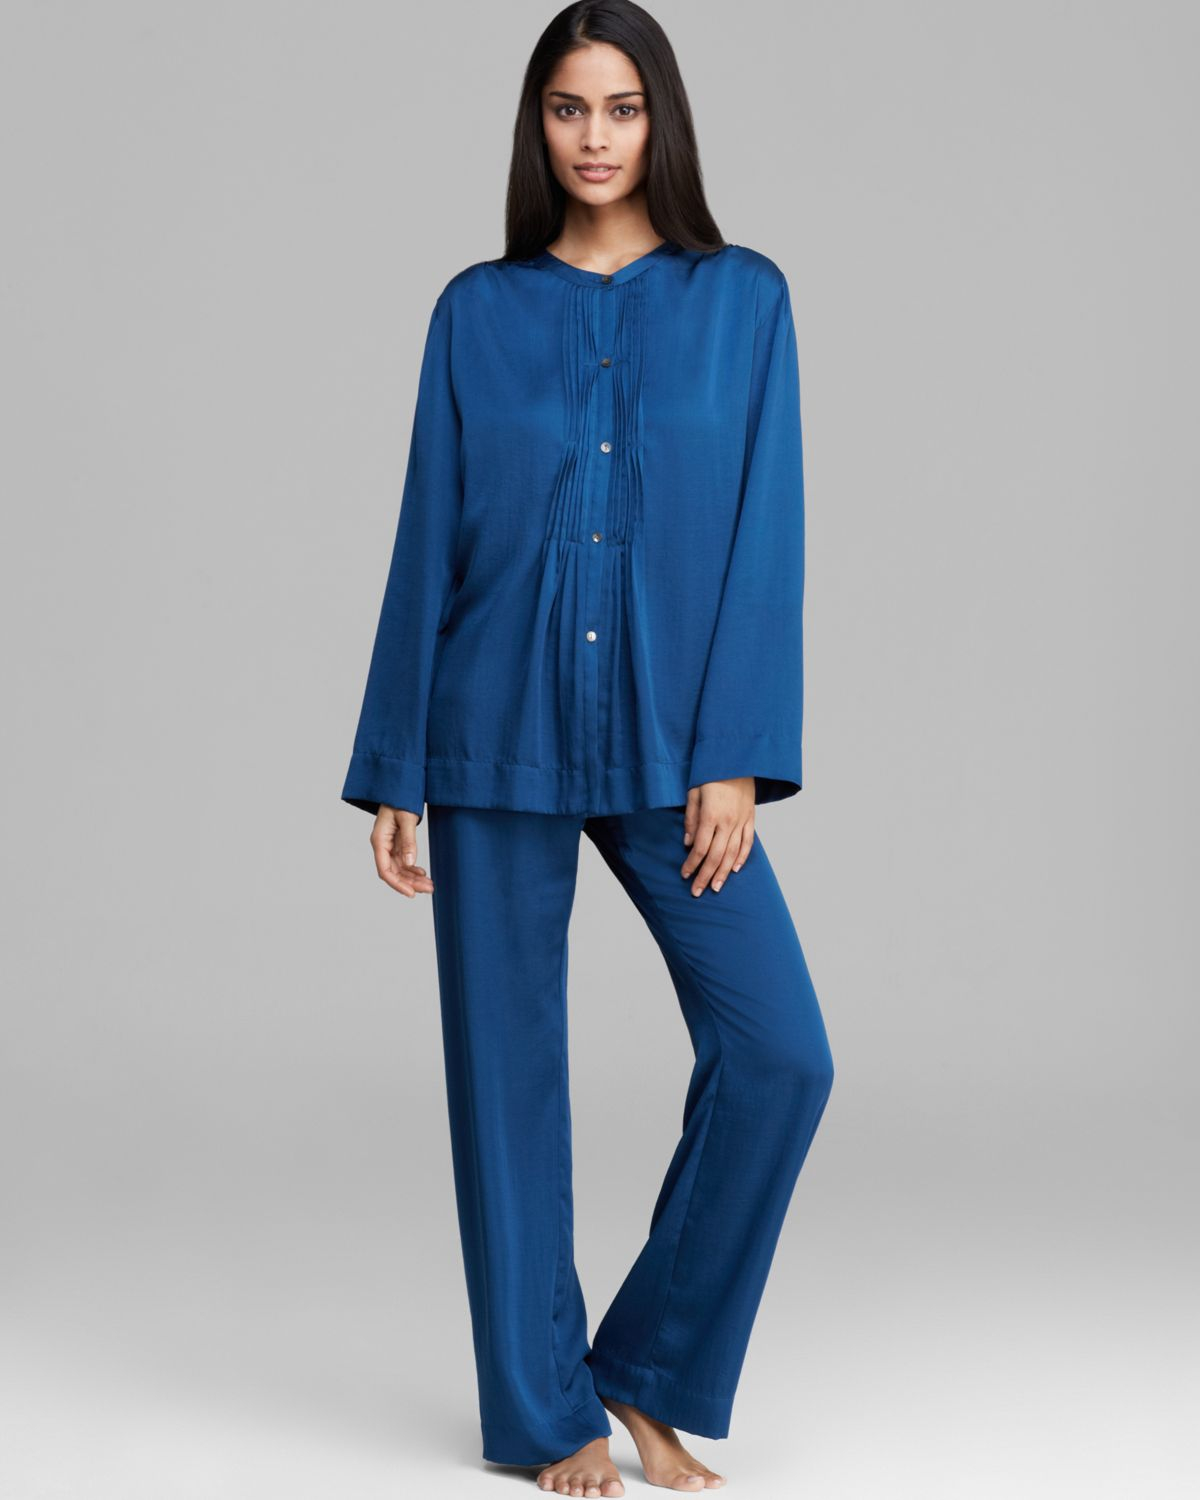 Lyst - Donna Karan Laundered Satin Woven Pajama Set in Blue